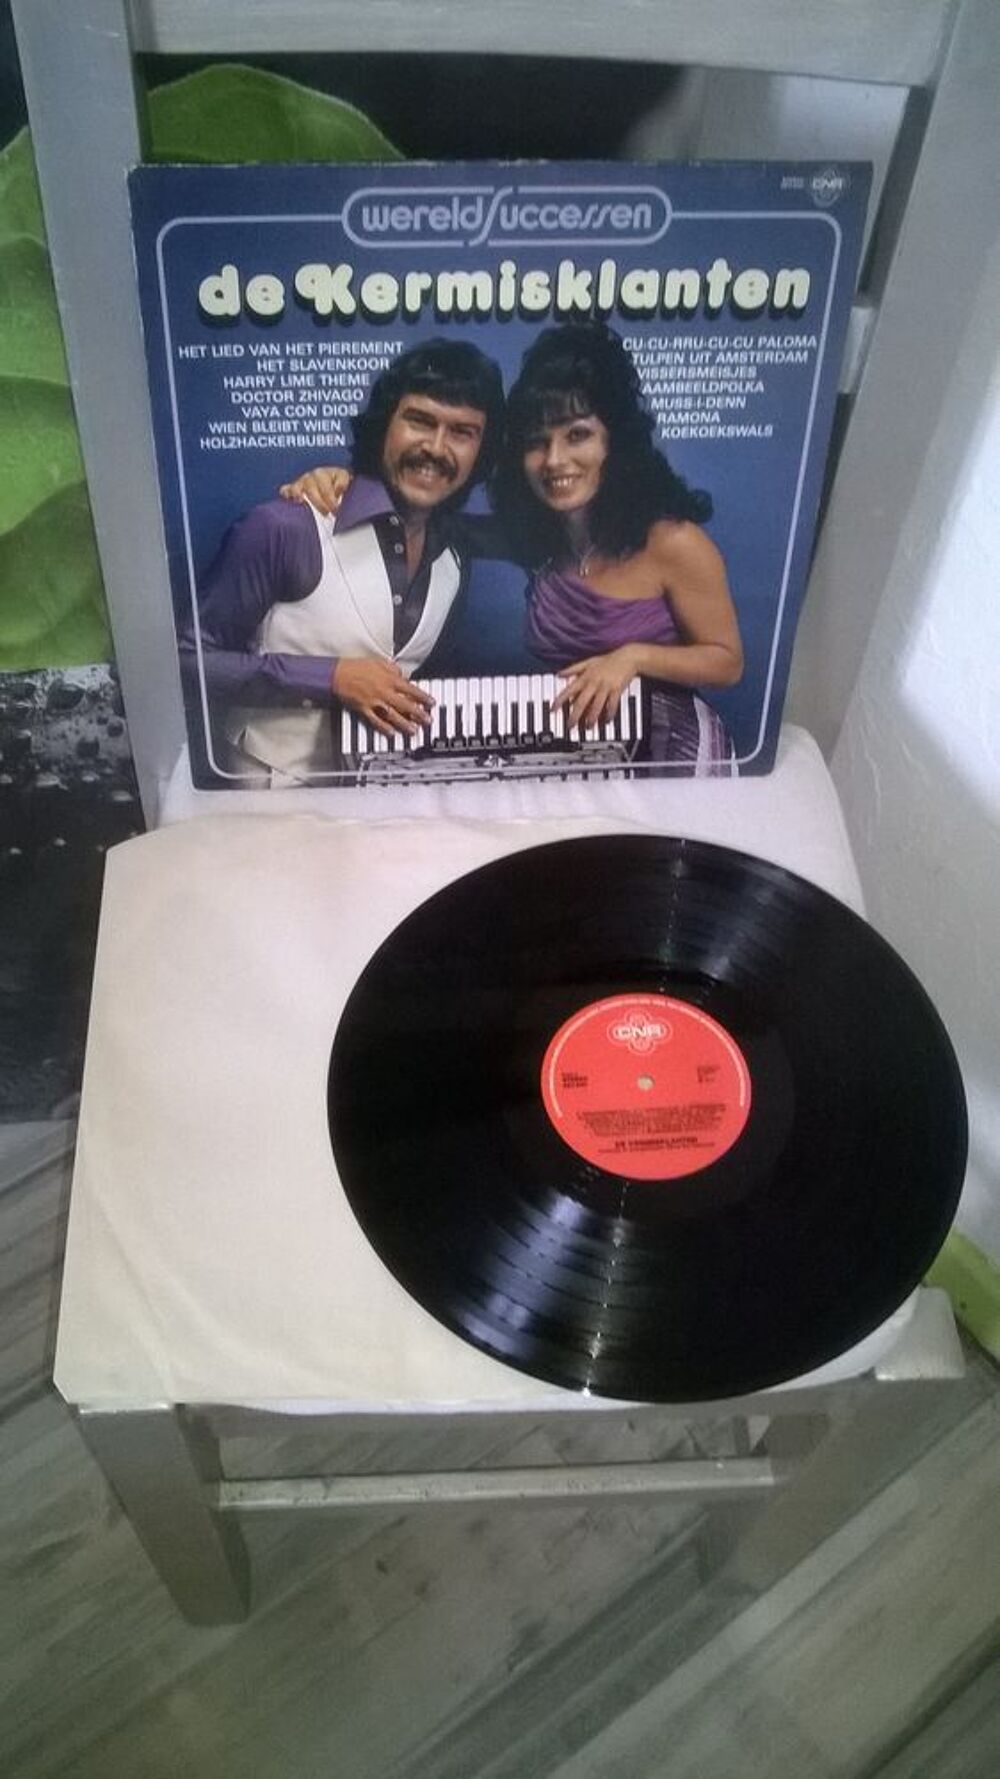 Vinyle De Kermisklanten
Wereldsuccessen
1977
Excellent et CD et vinyles